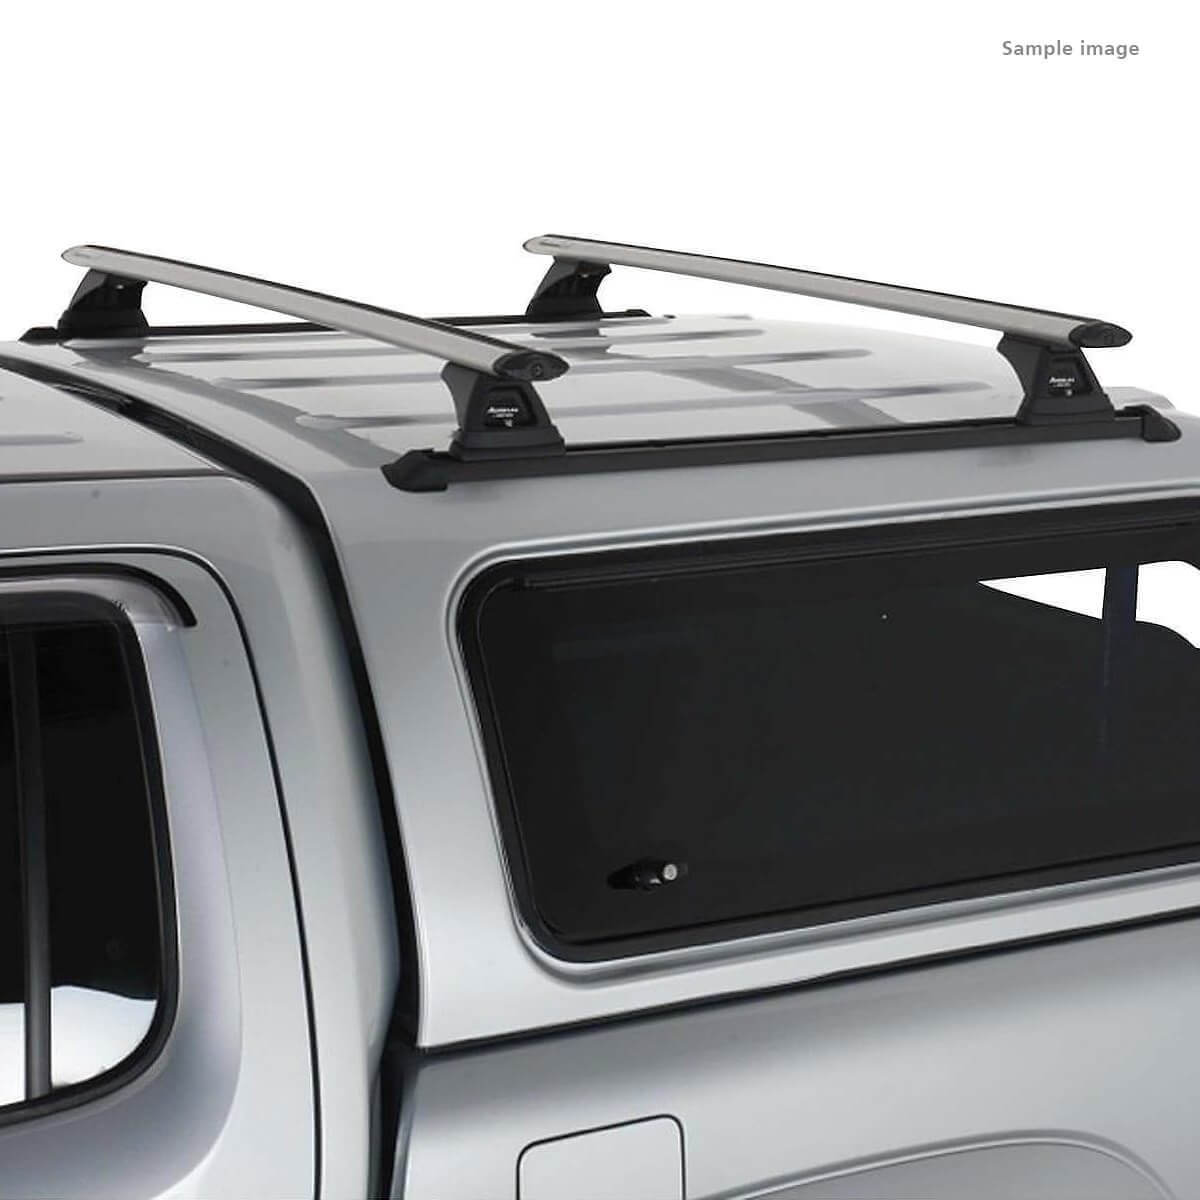 Toyota Hilux canopy roof rack f